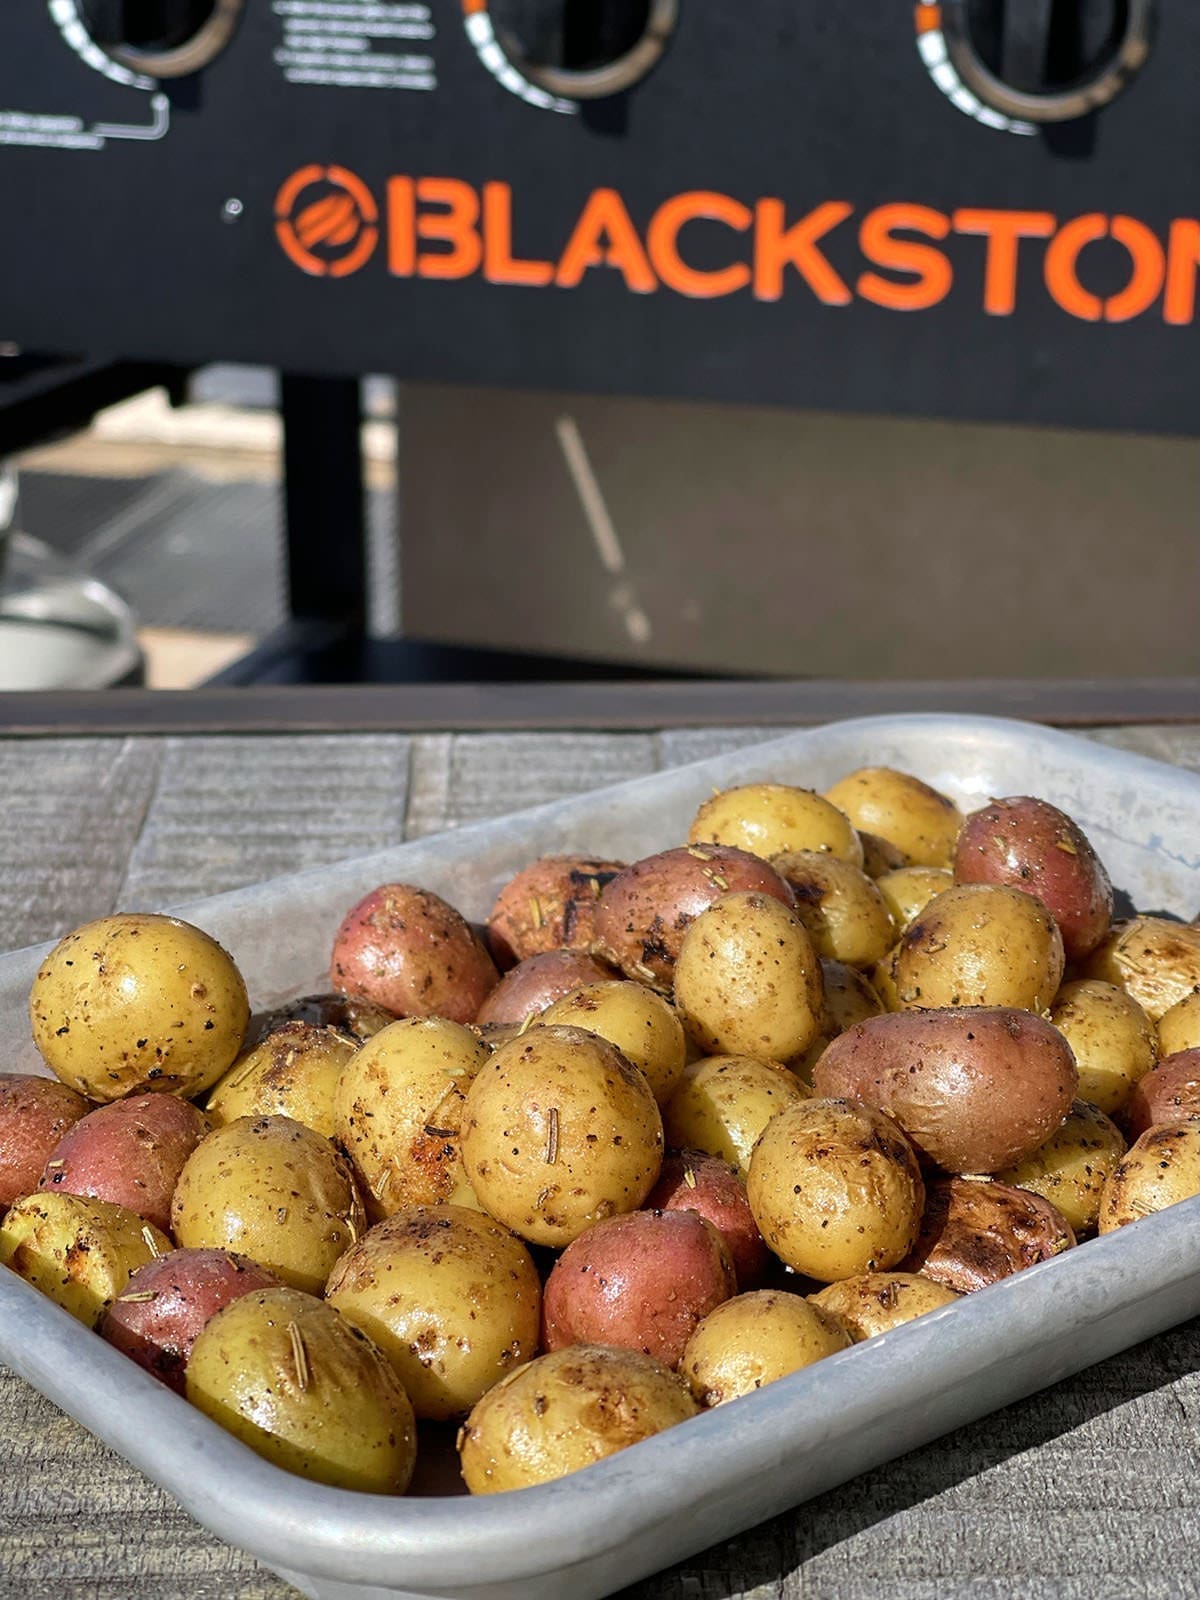 Blackstone potatoes on a silver baking sheet.